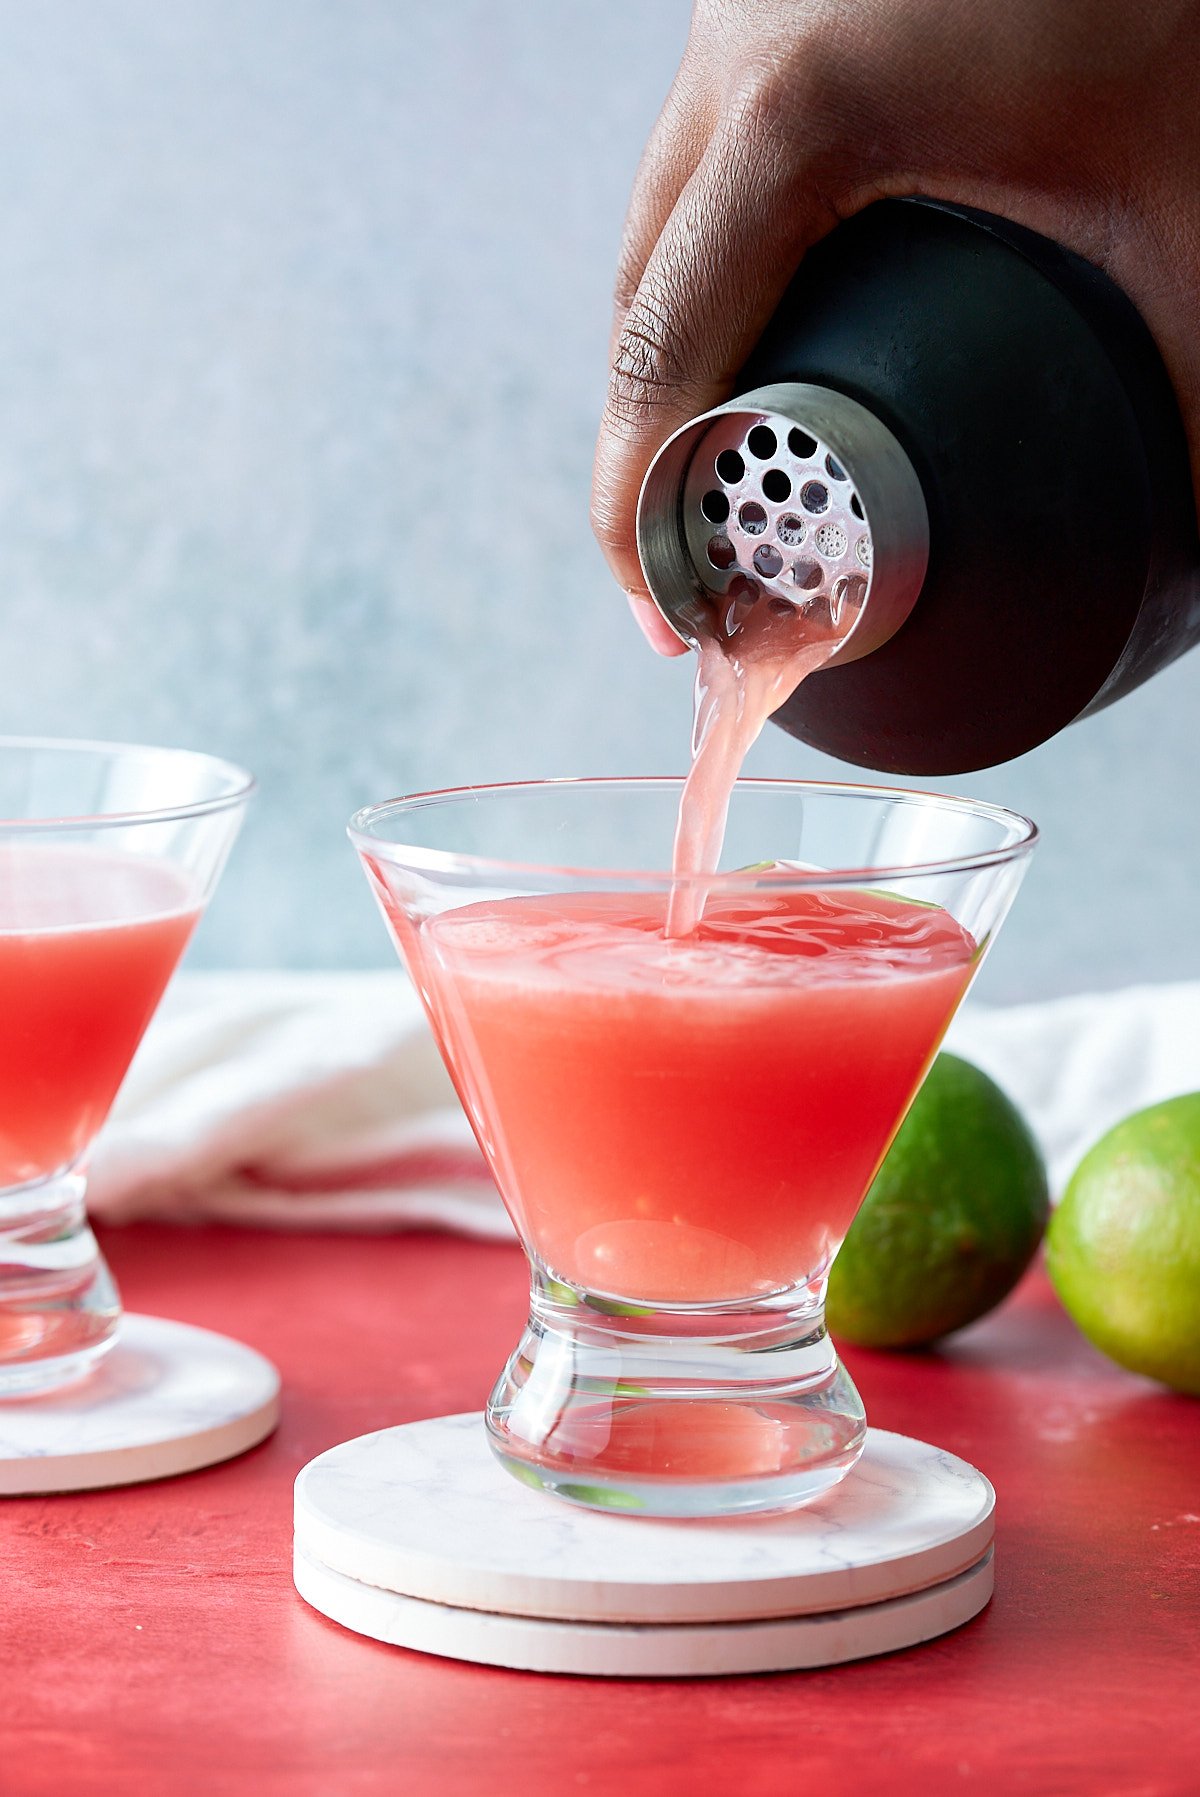 watermelon martini being poured into martini glass